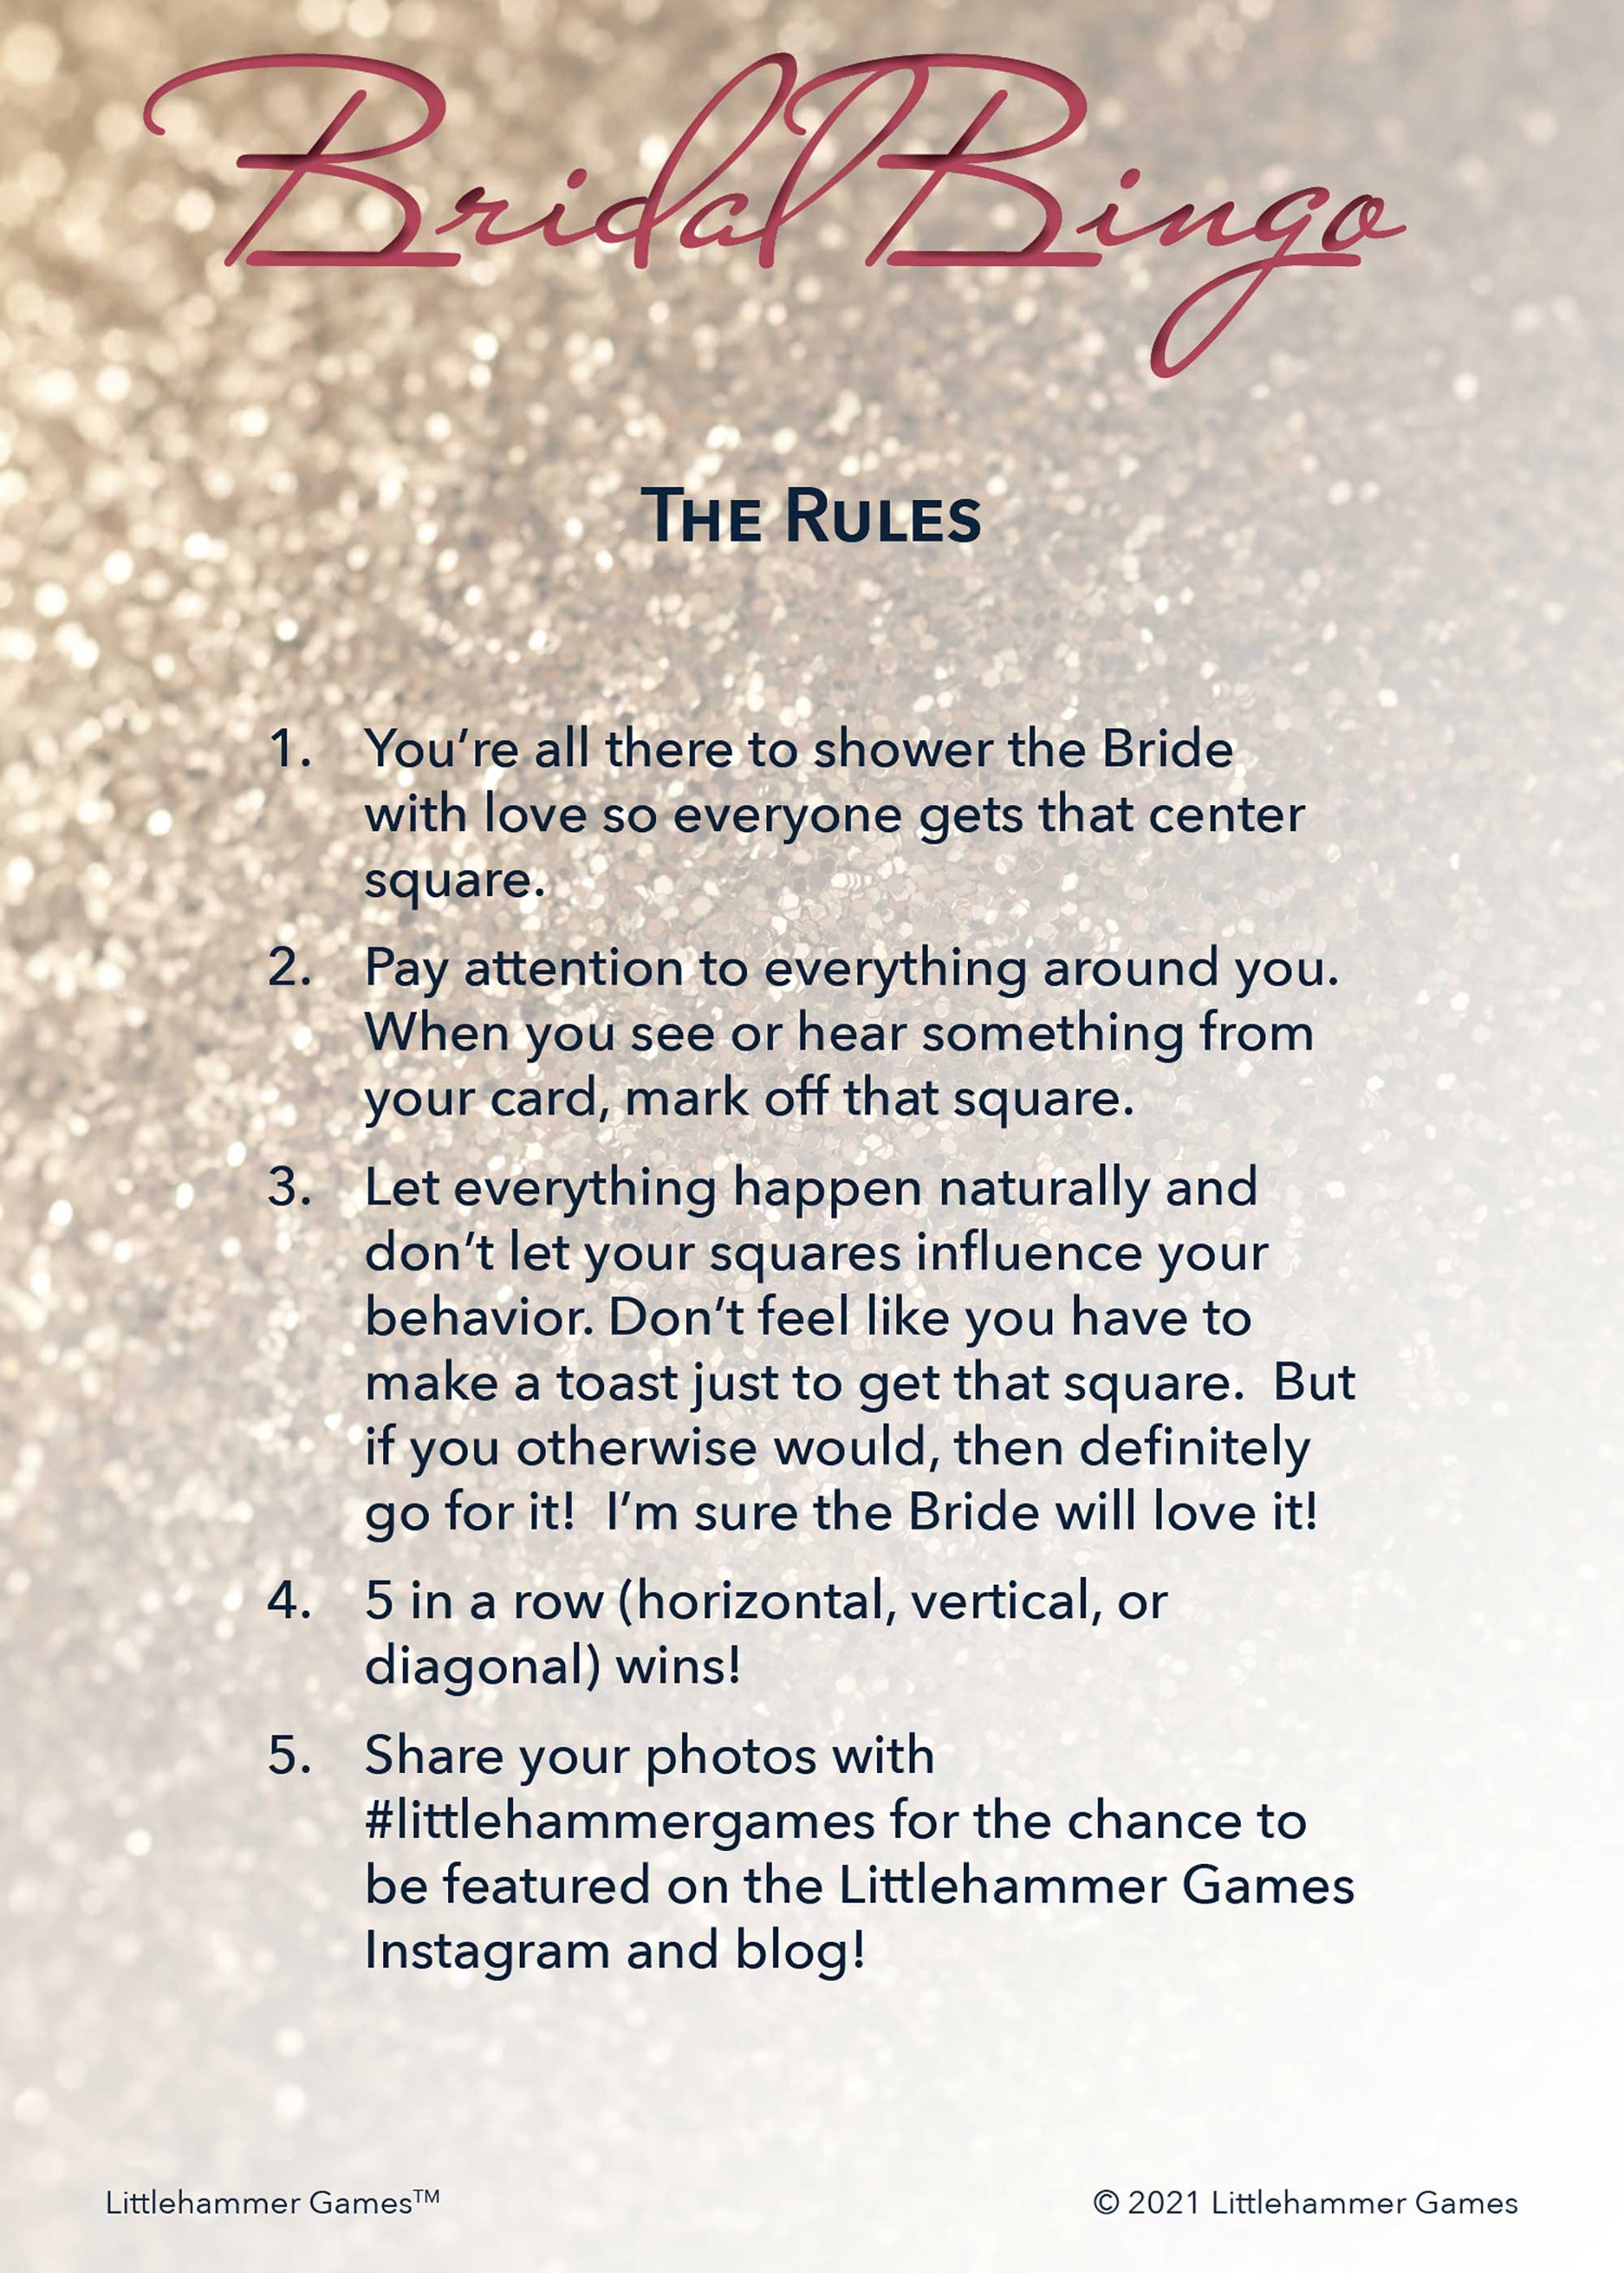 Bridal Bingo rules card on a glittery rose gold background